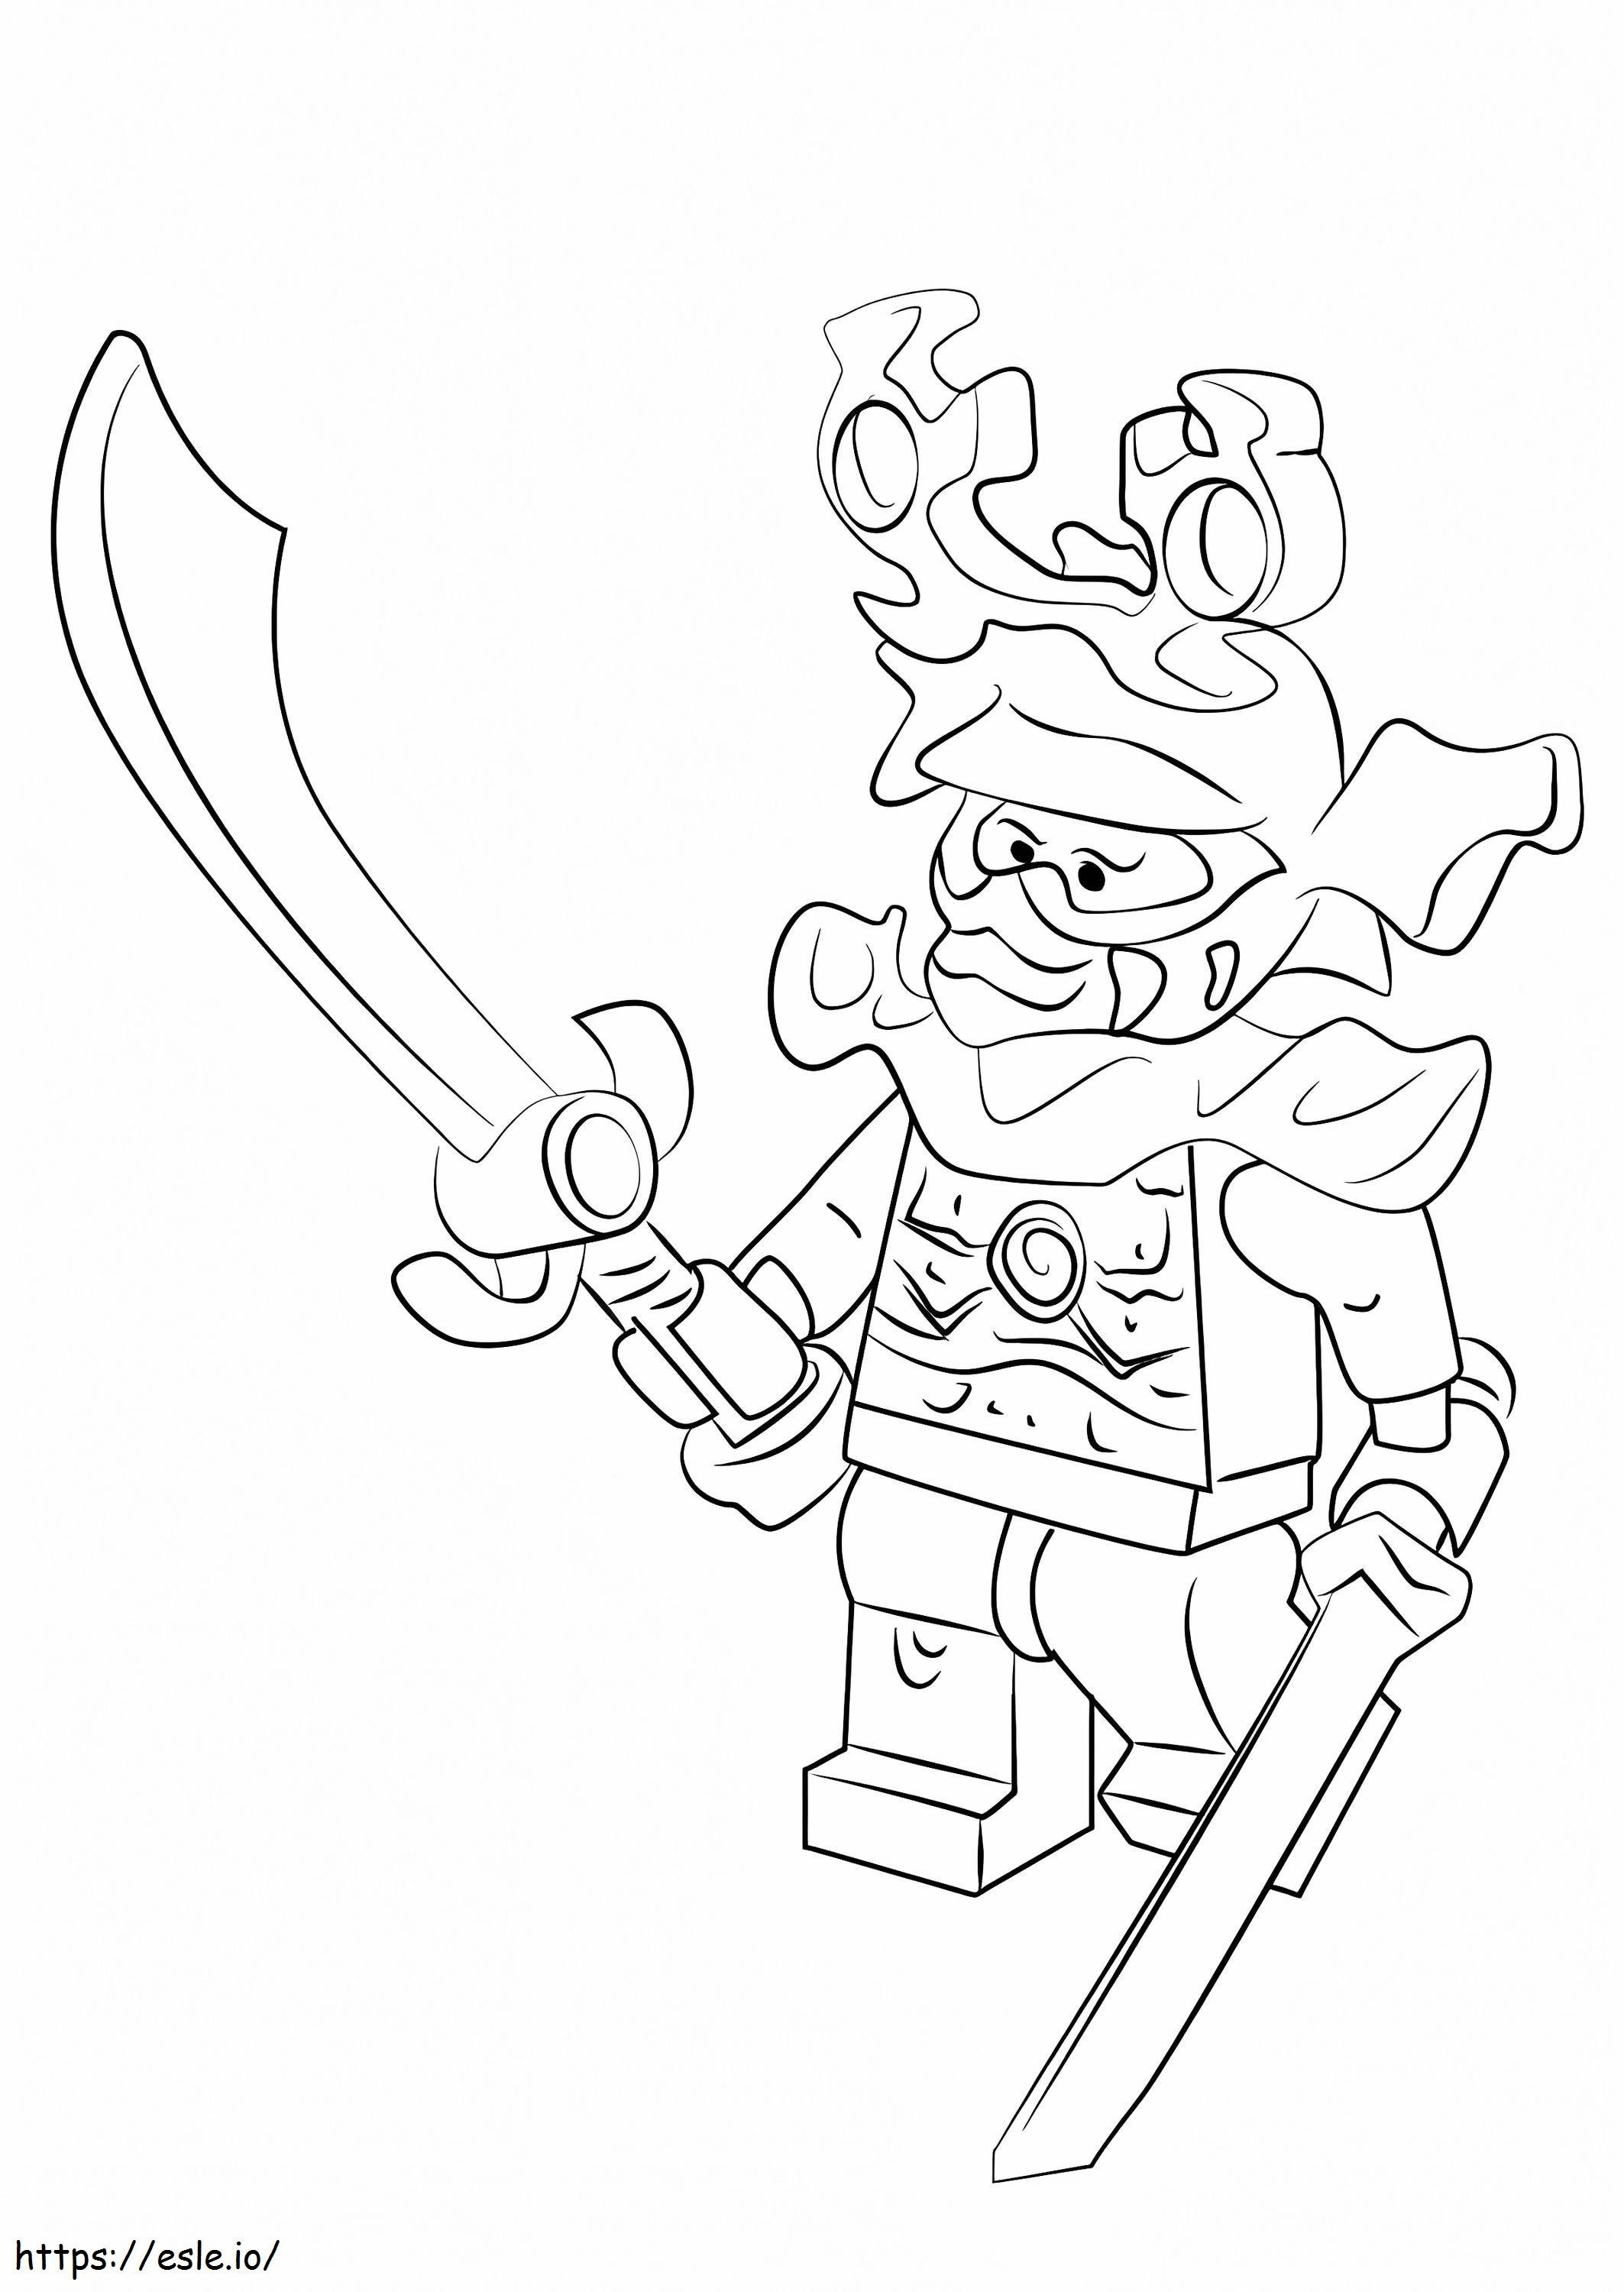 Stone Warrior From Ninjago coloring page